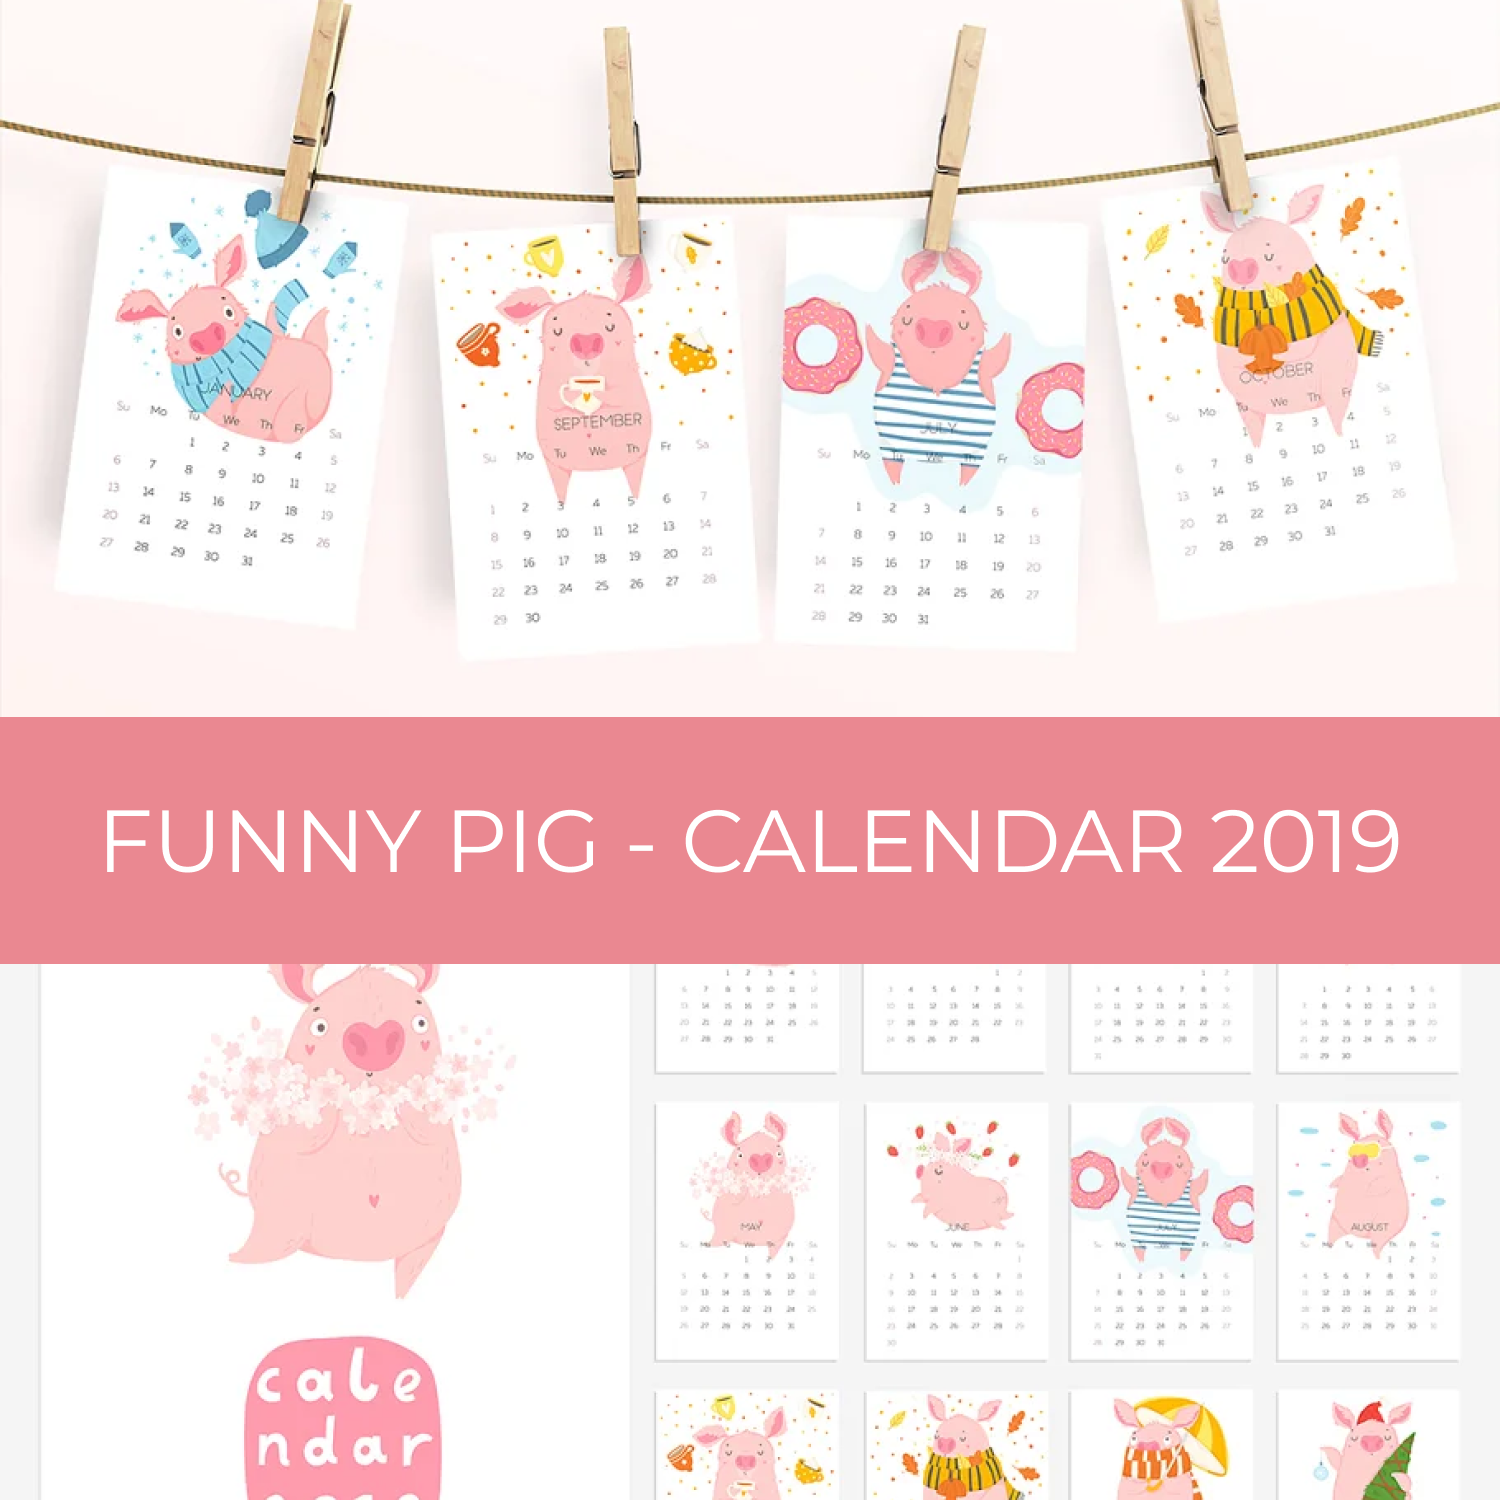 Prints of funny pig calendar 2019.